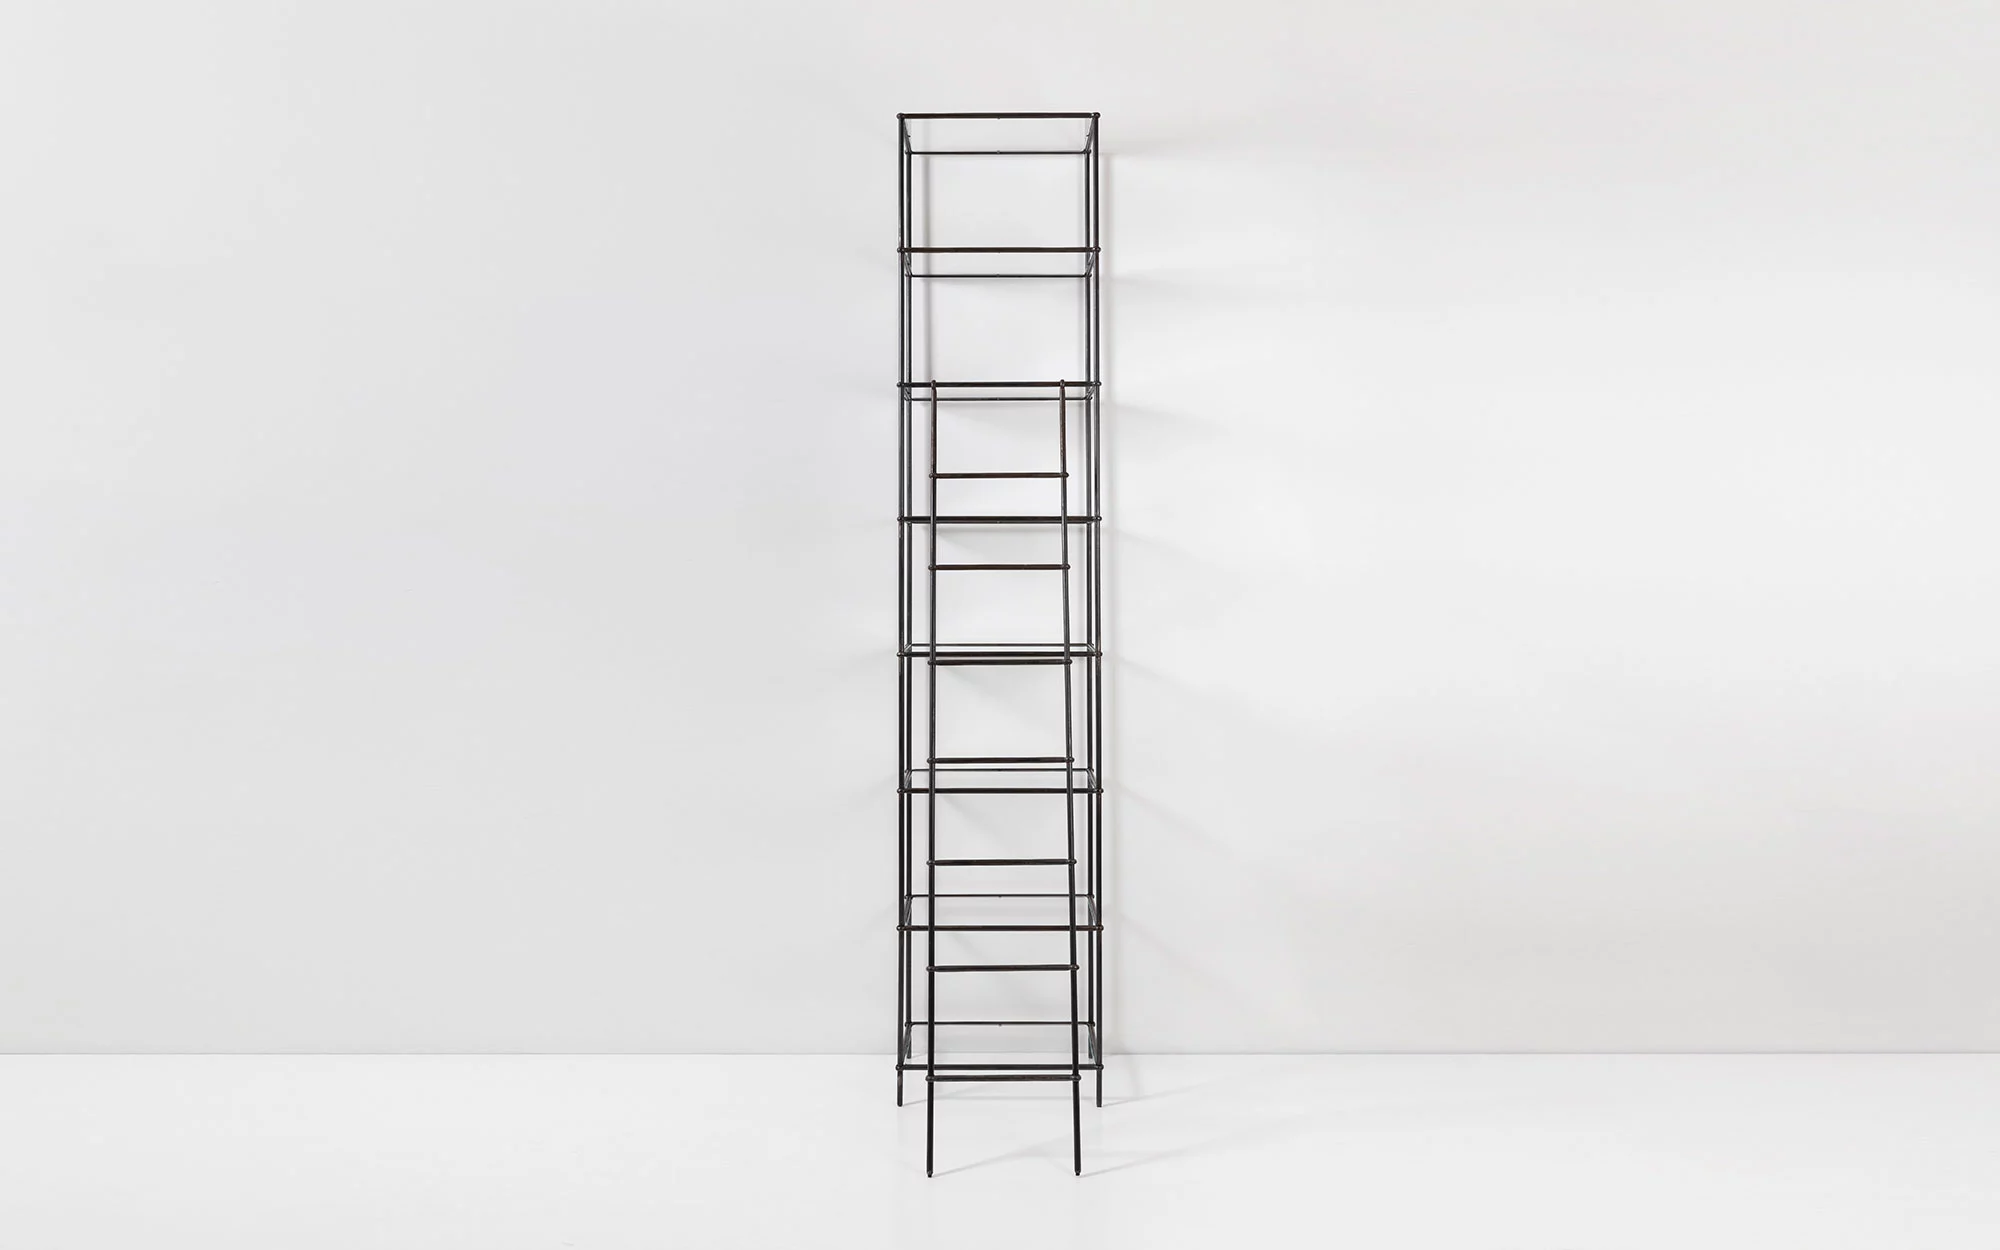 Ciel tower simple - Ronan & Erwan Bouroullec - Pendant light - Galerie kreo